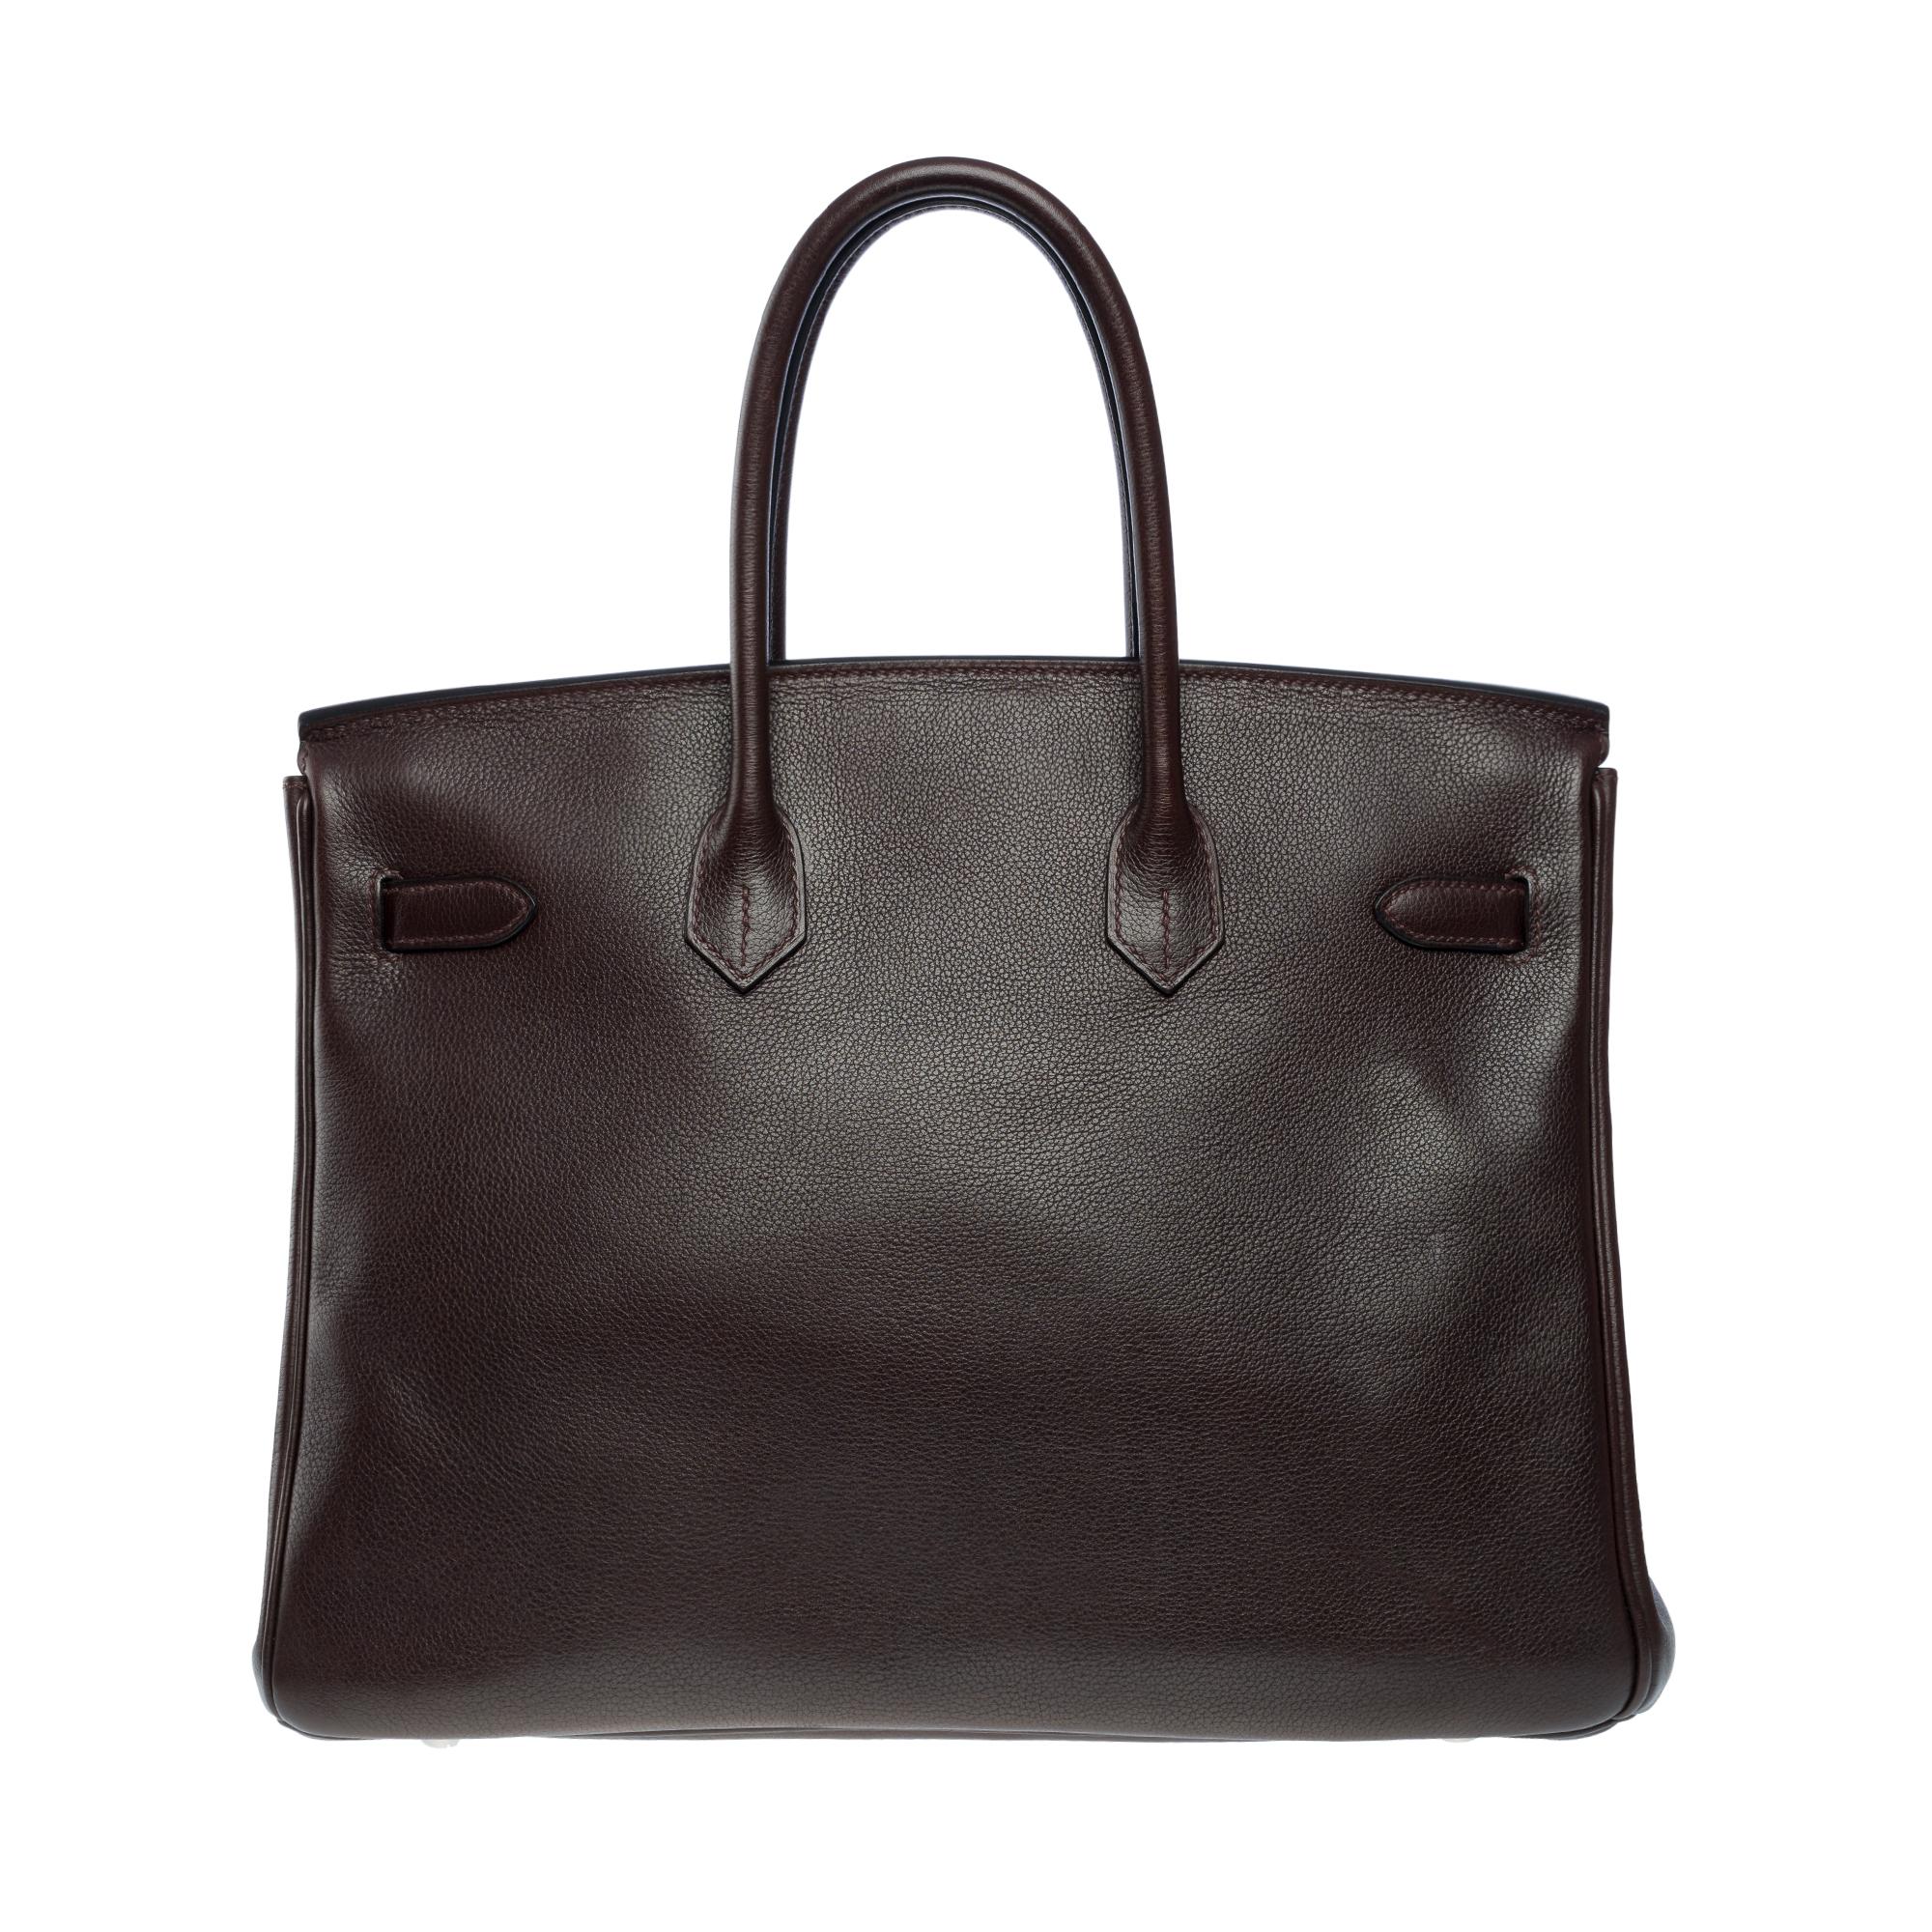 Amazing Hermès Birkin 35 handbag in grained calf leather Evergrain brown , SHW For Sale 1